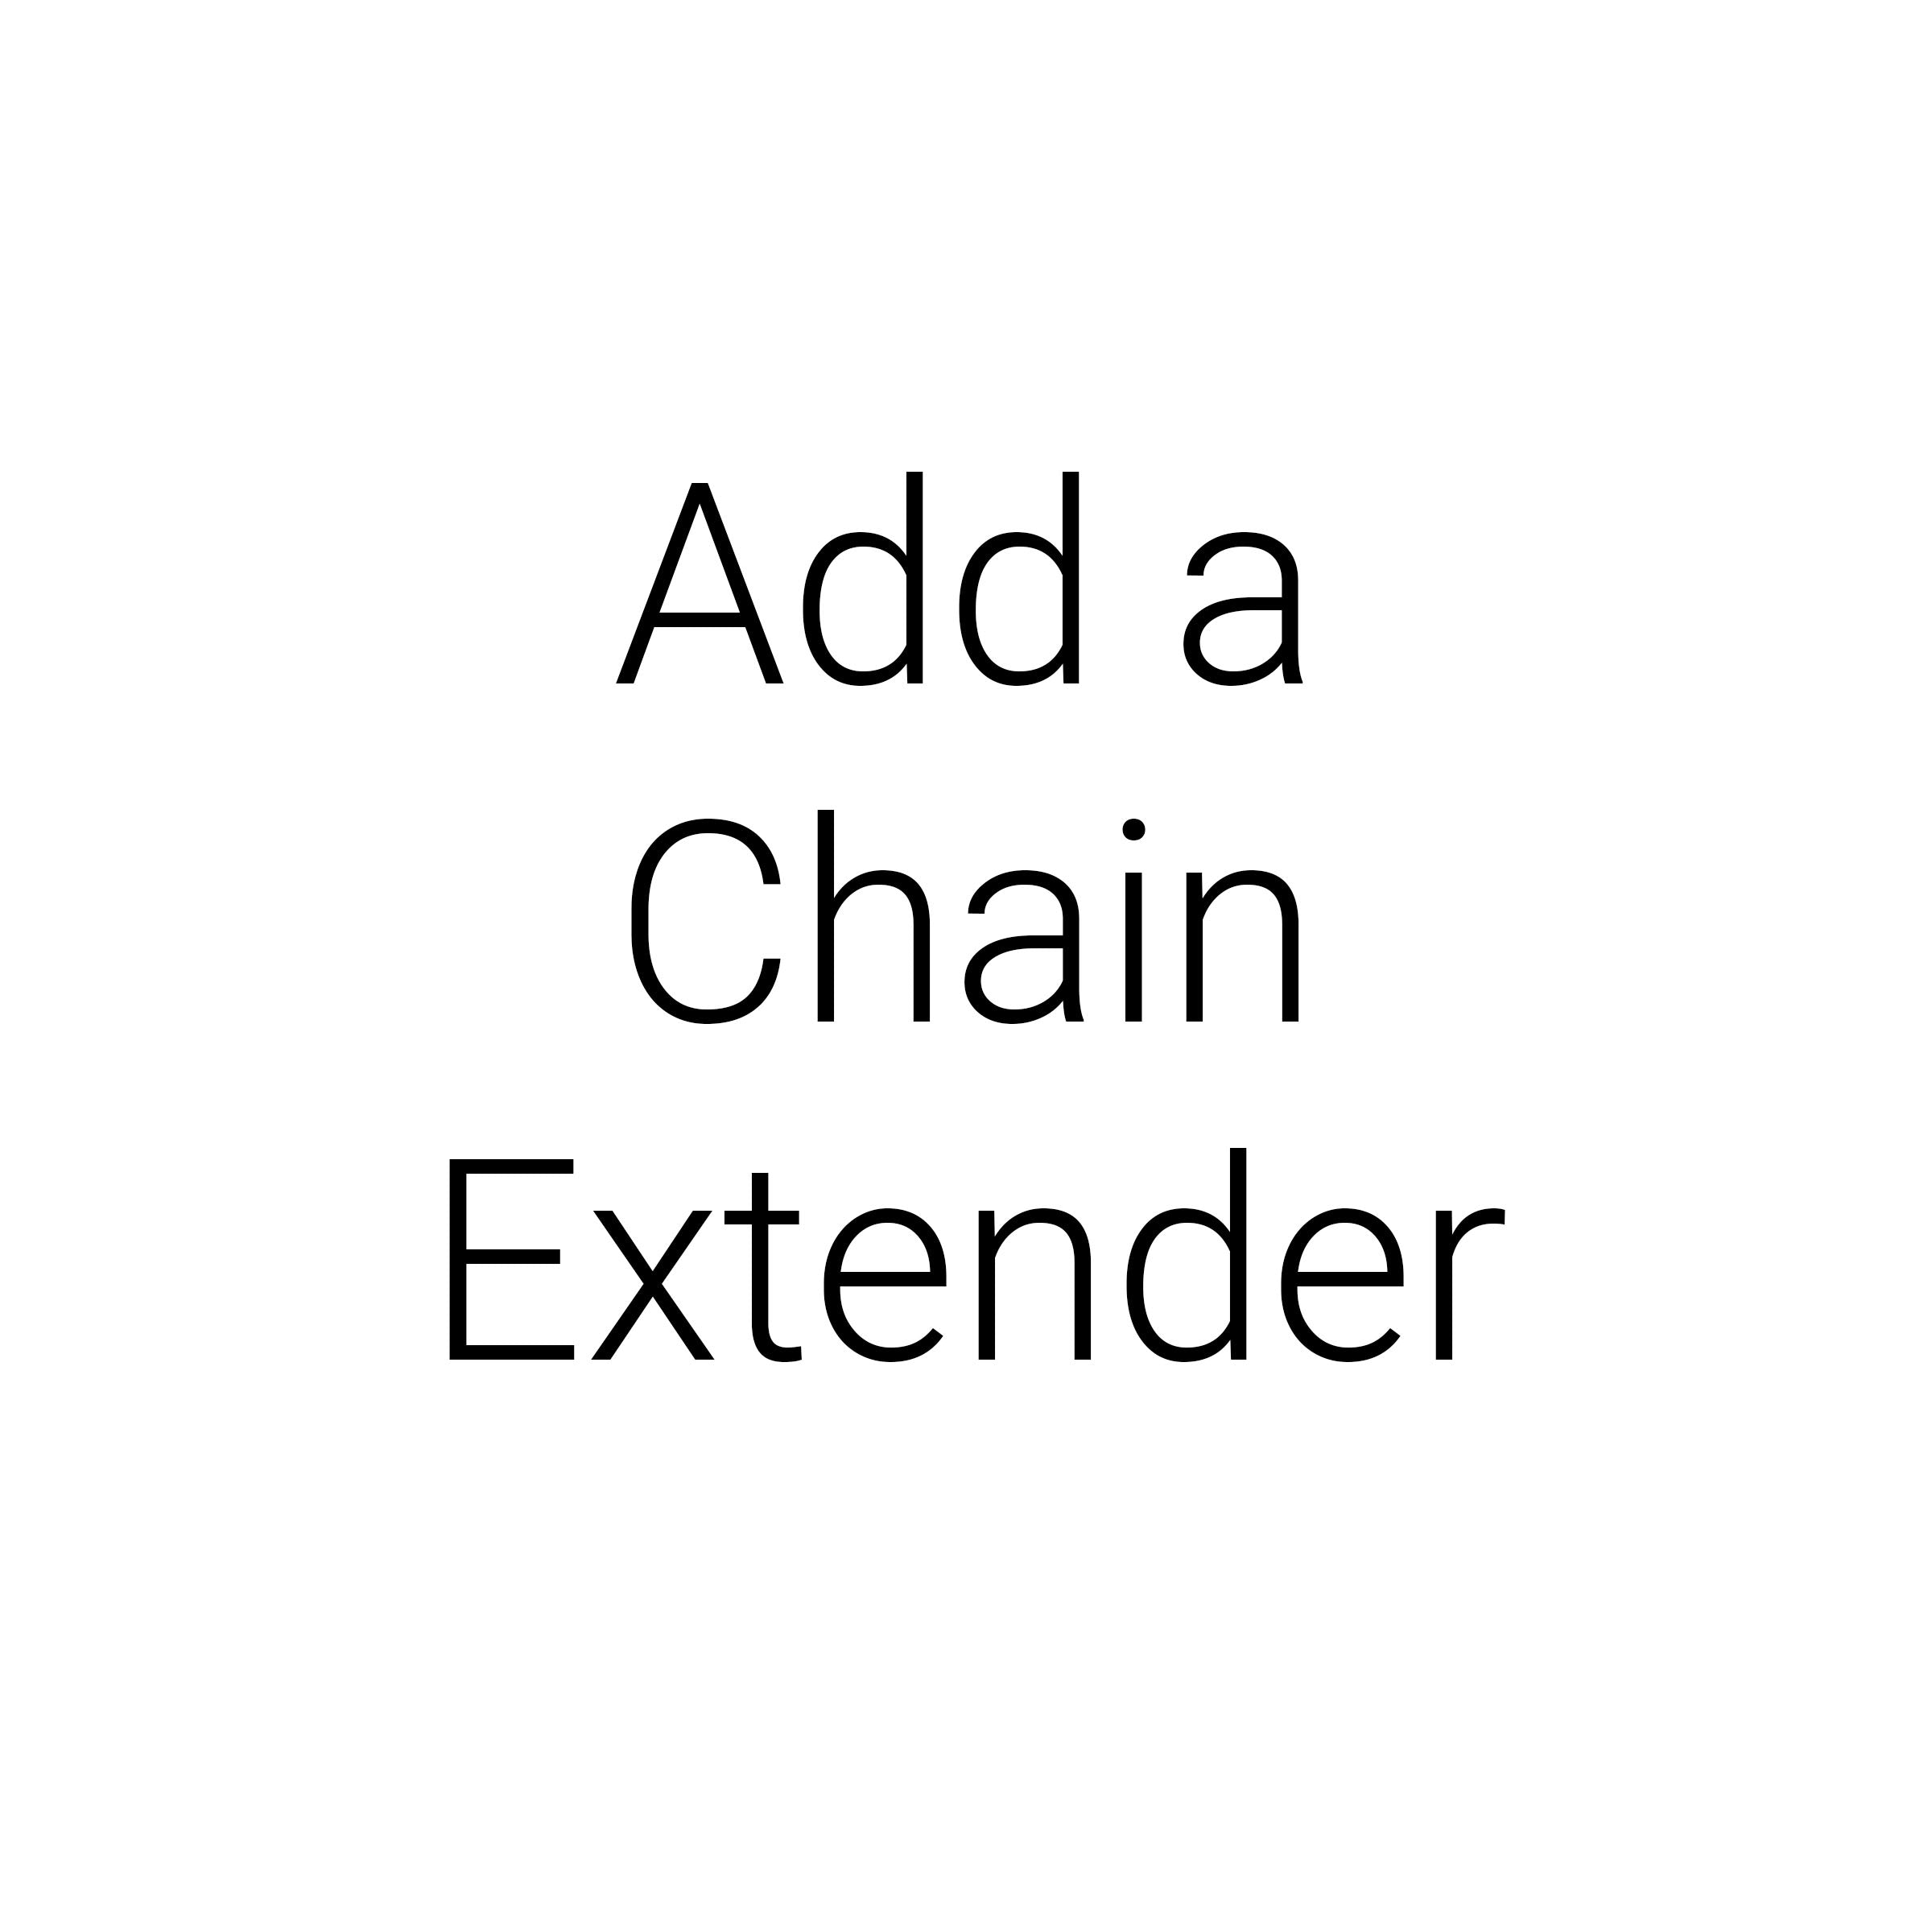 Add a Chain Extender